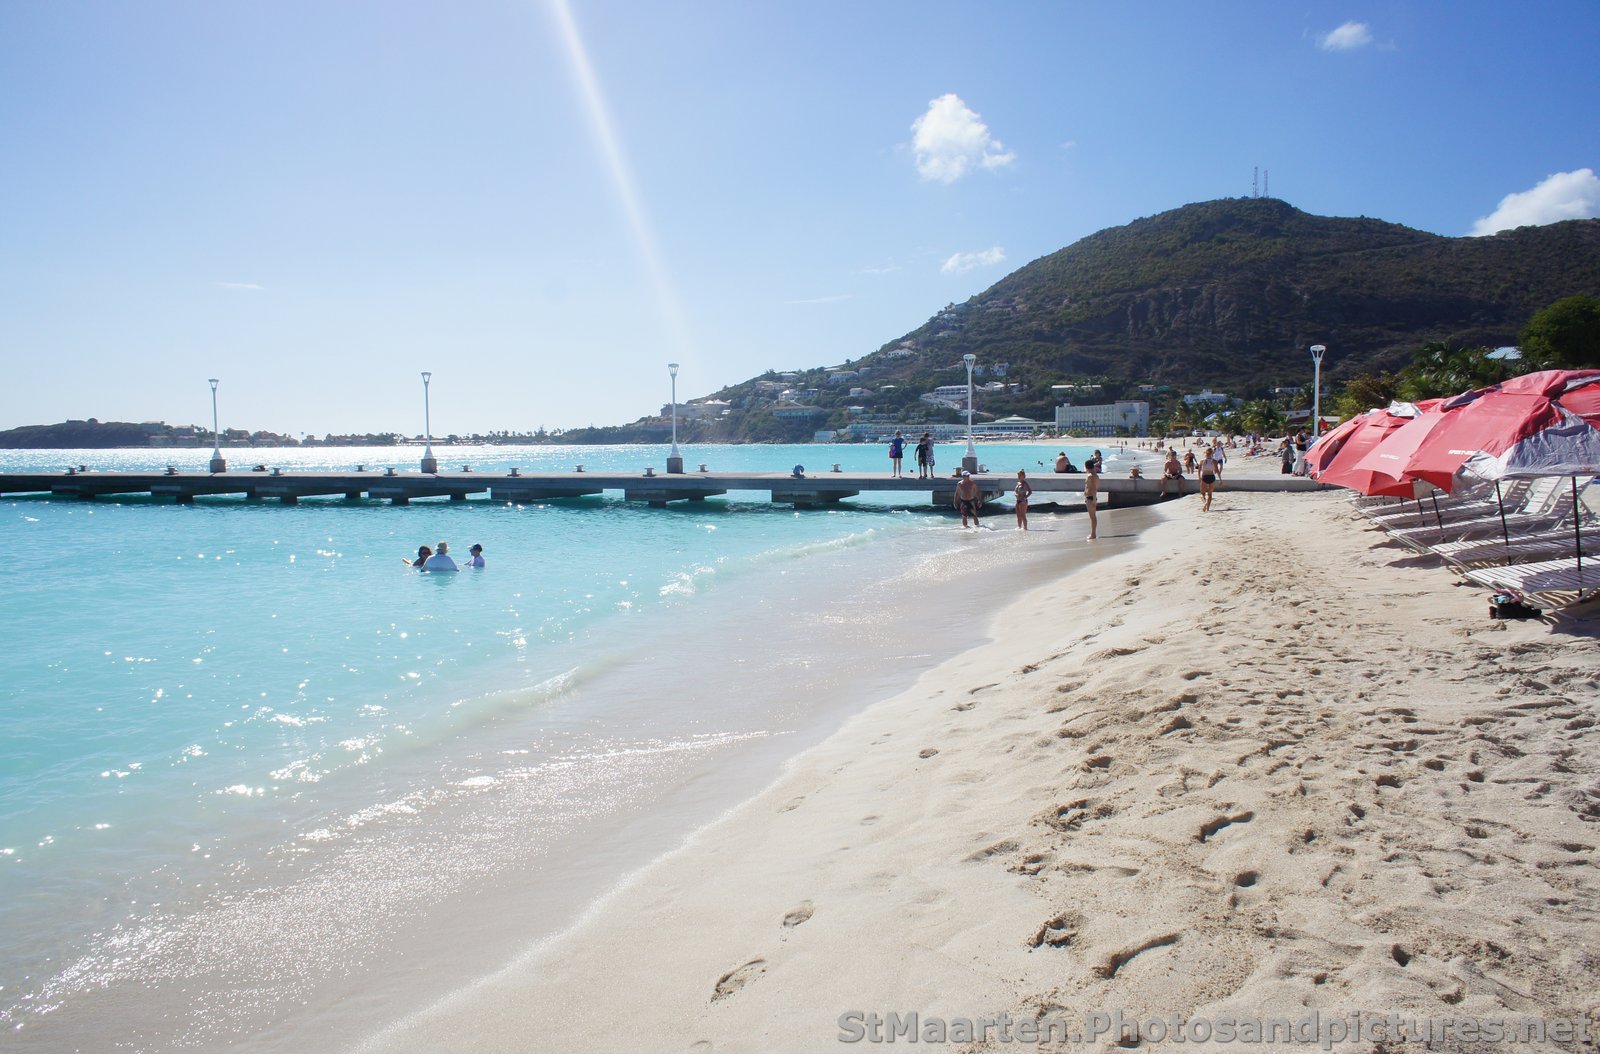 Stone dock for water taxi at beach area of Philipsburg St Maarten.jpg
